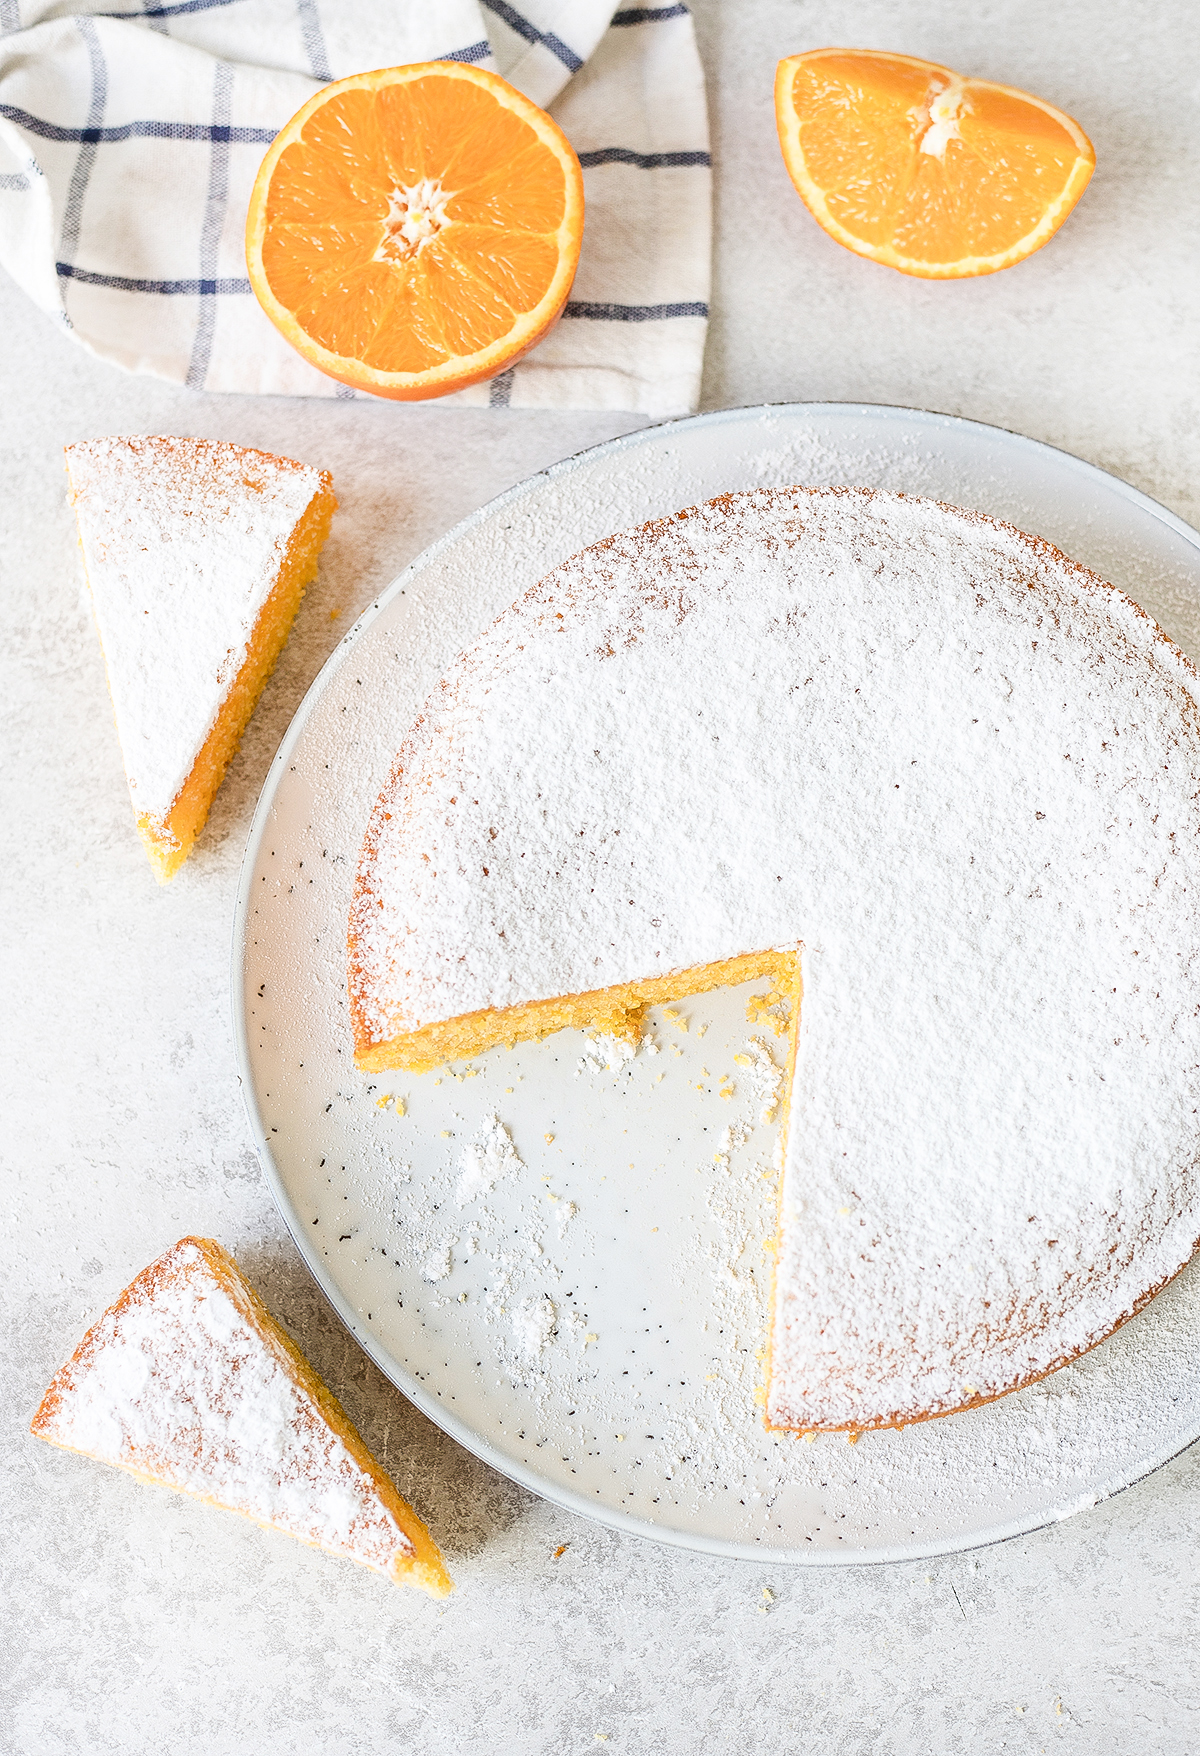 Orange Polenta Cake is a simple Italian-style cake